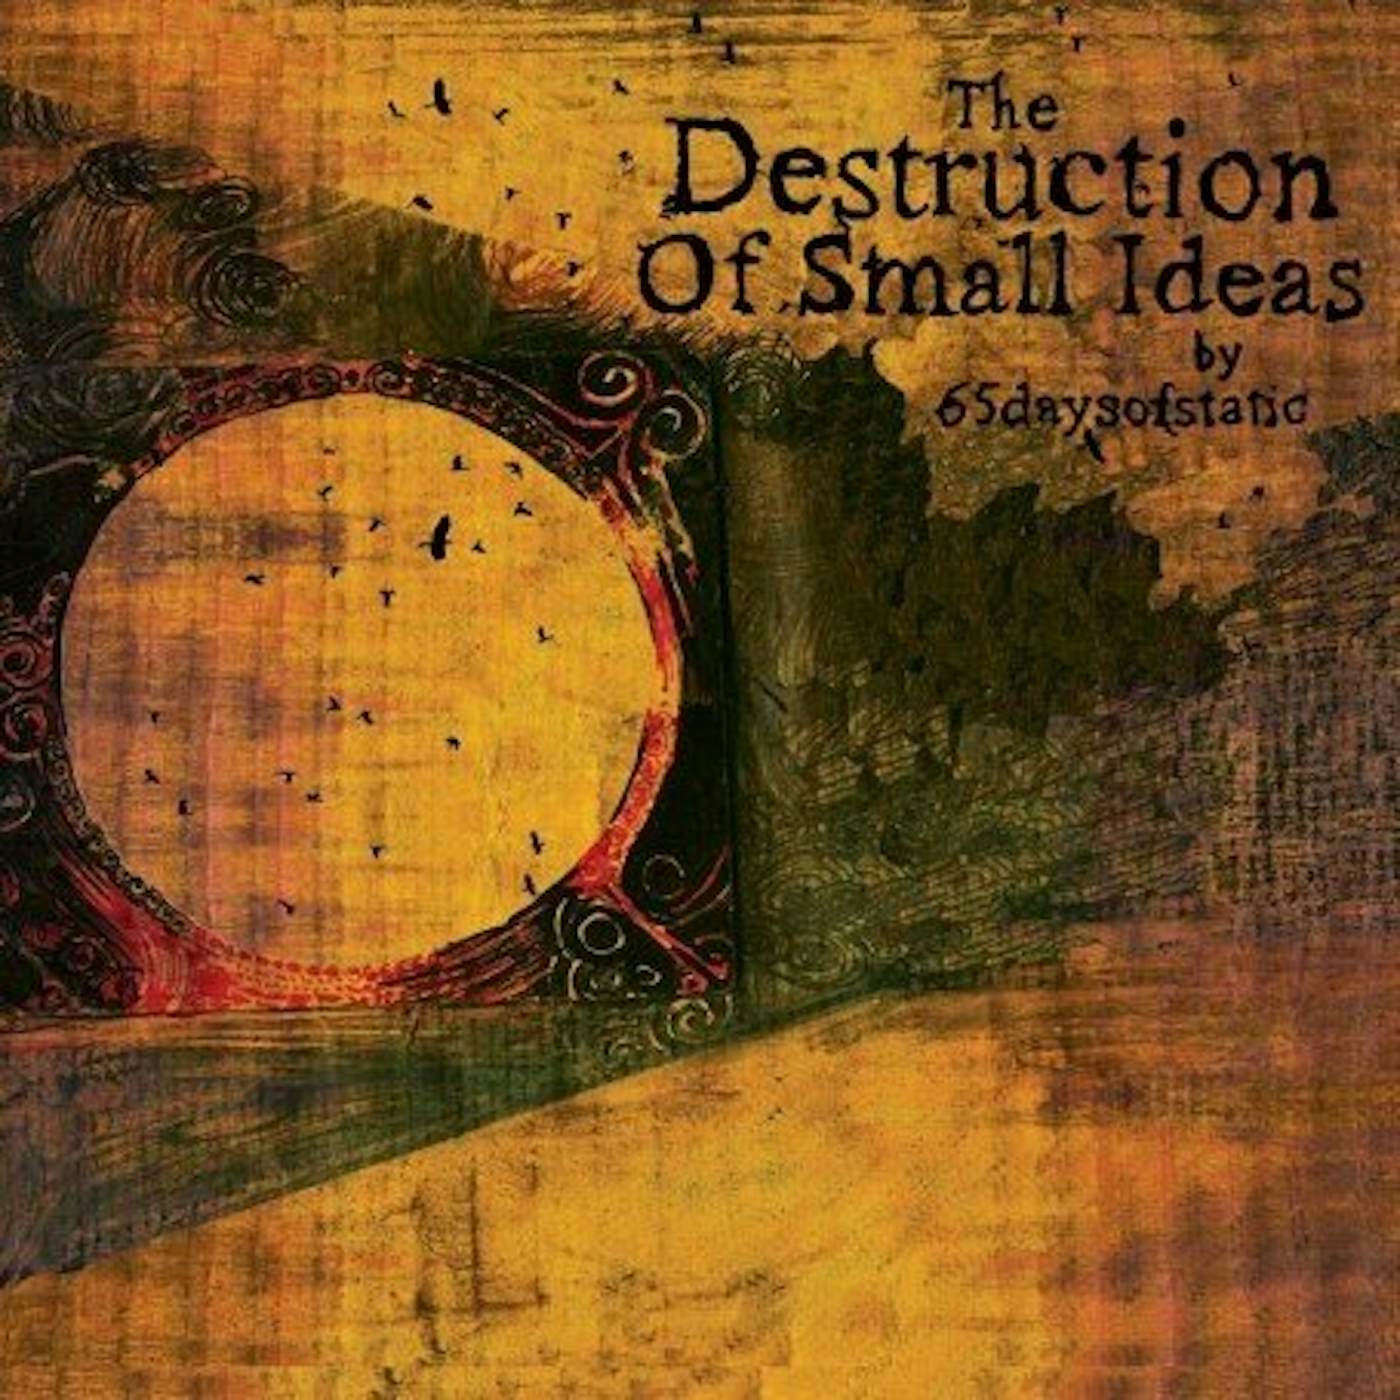 65daysofstatic DESTRUCTION OF SMALL IDEAS Vinyl Record